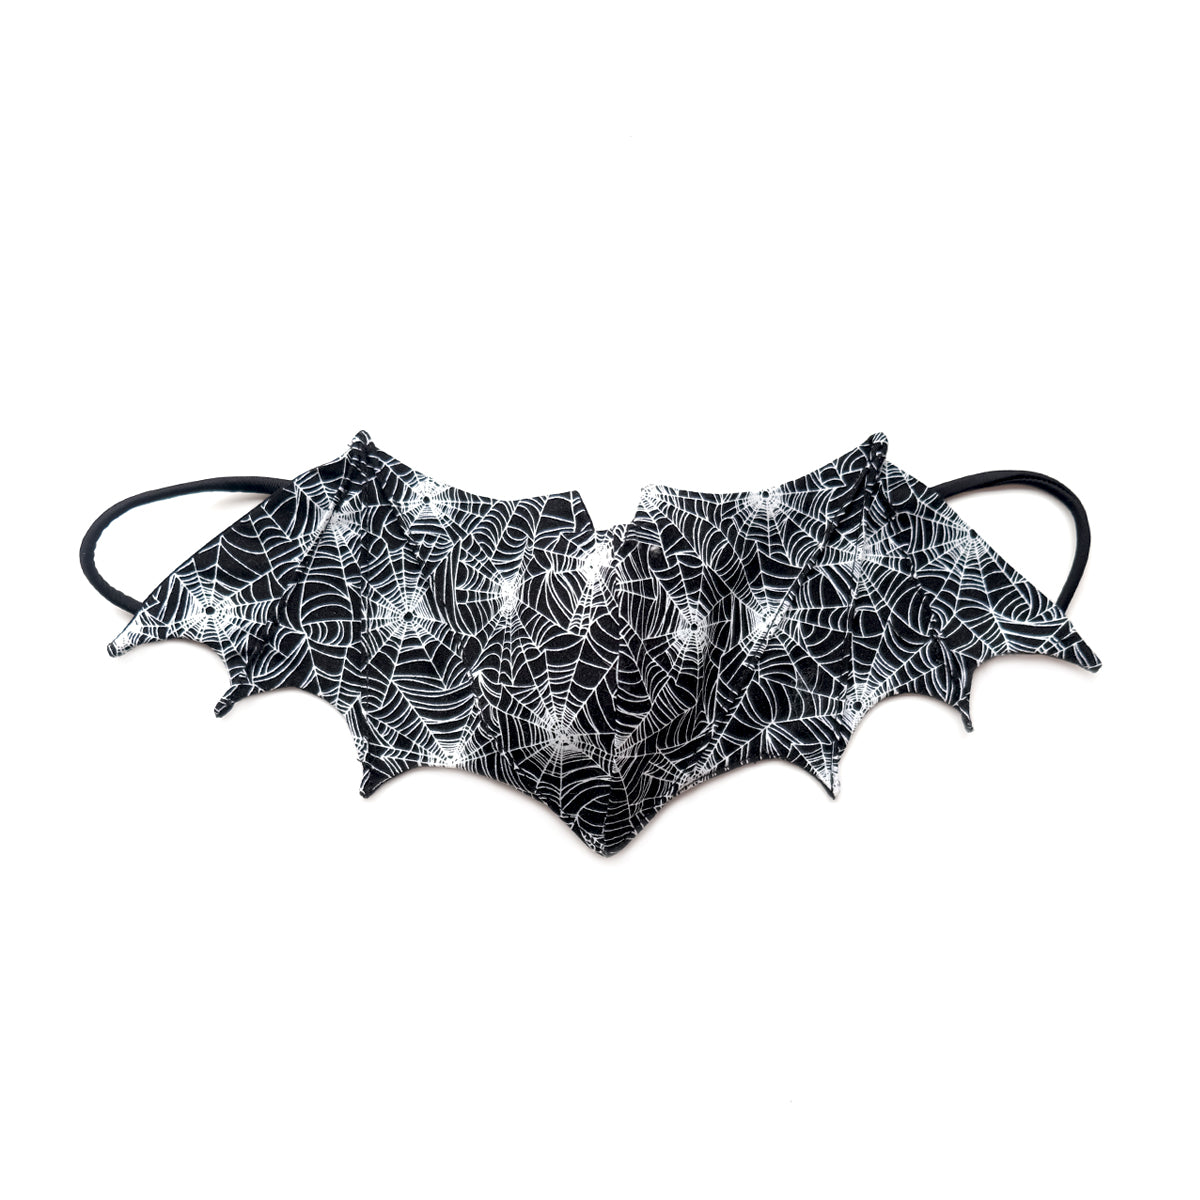 Spiderweb Bat Mask